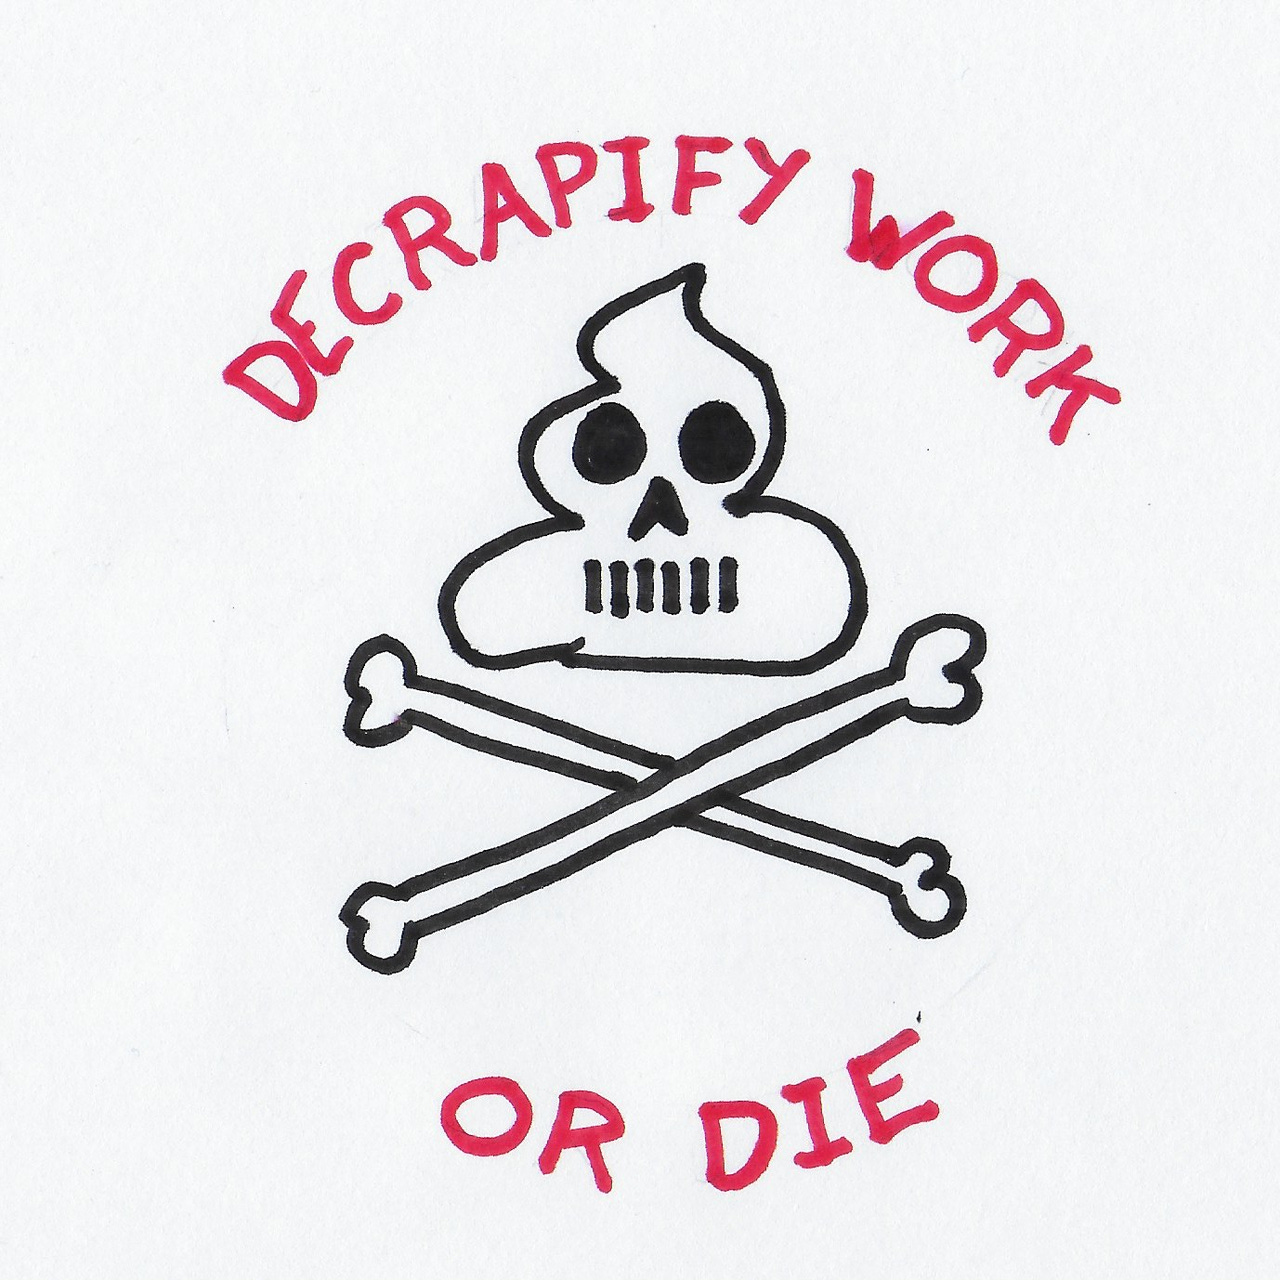 Artwork for The Decrapify Work Not-Newsletter